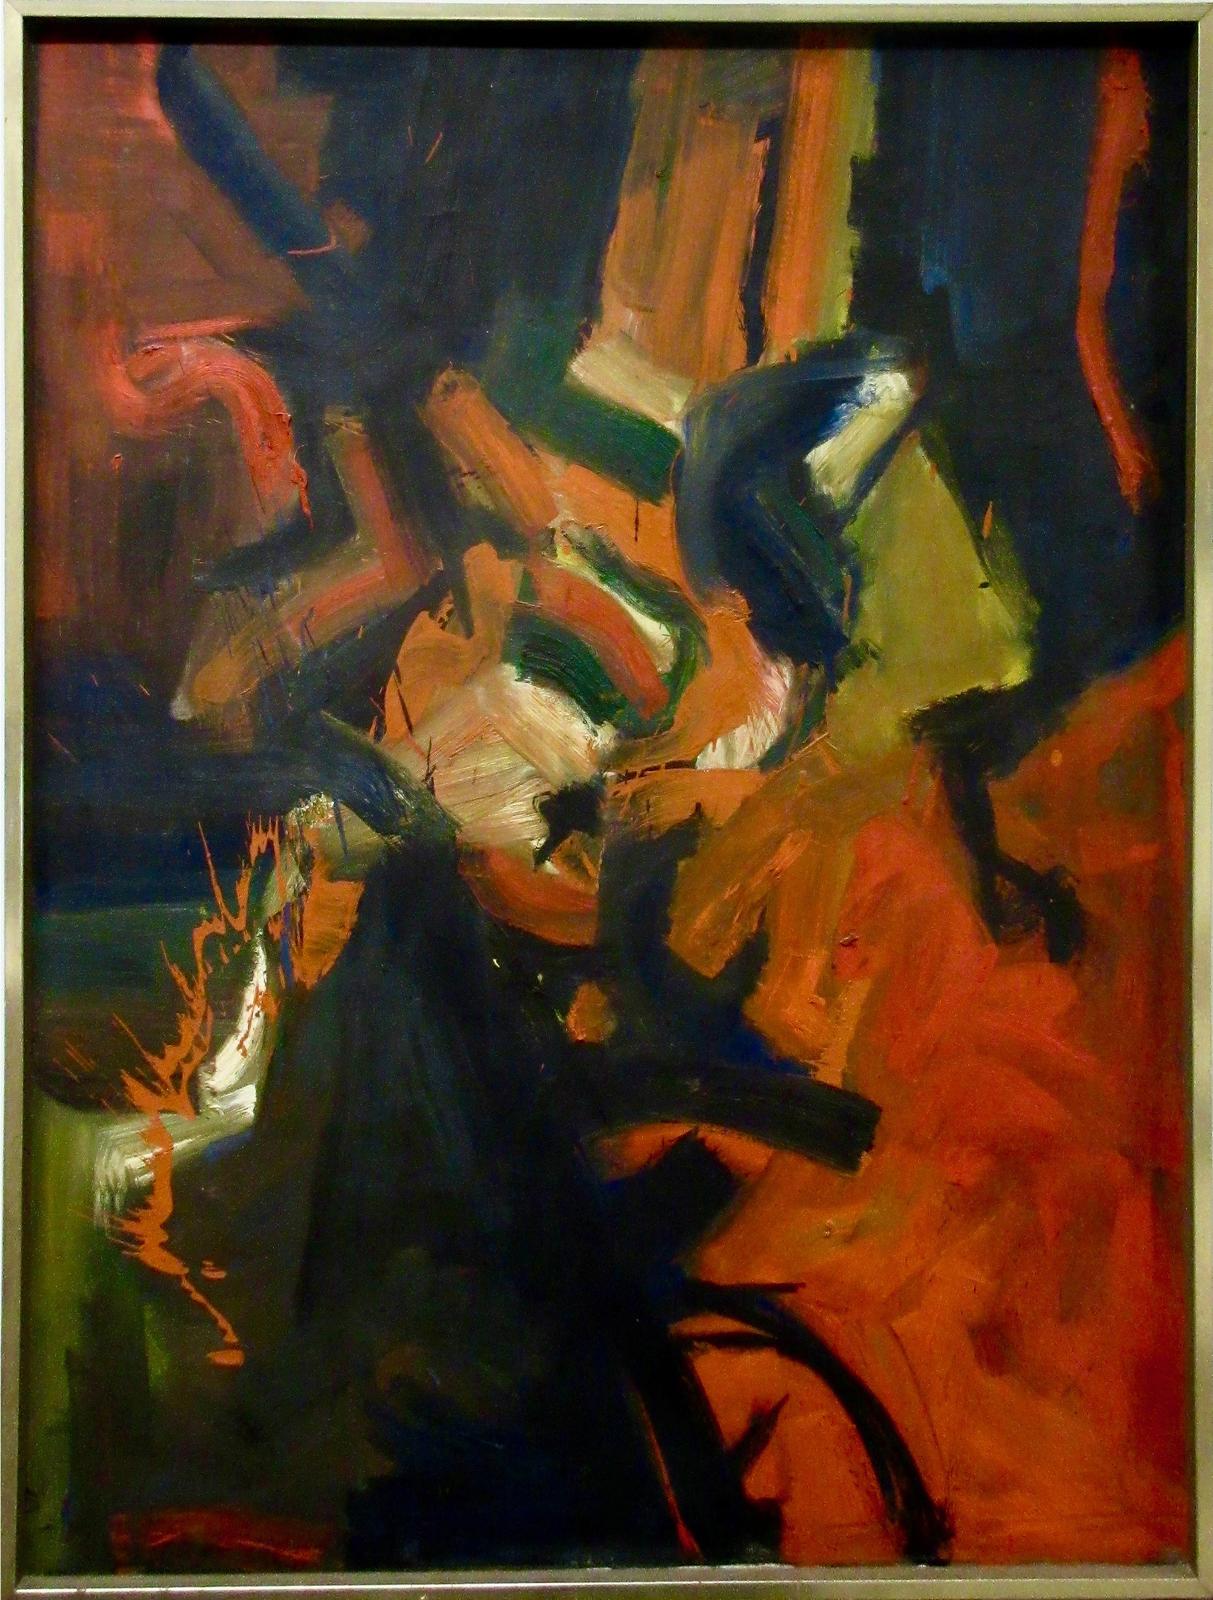 John Lennard (1937) - Untitled (Abstract)